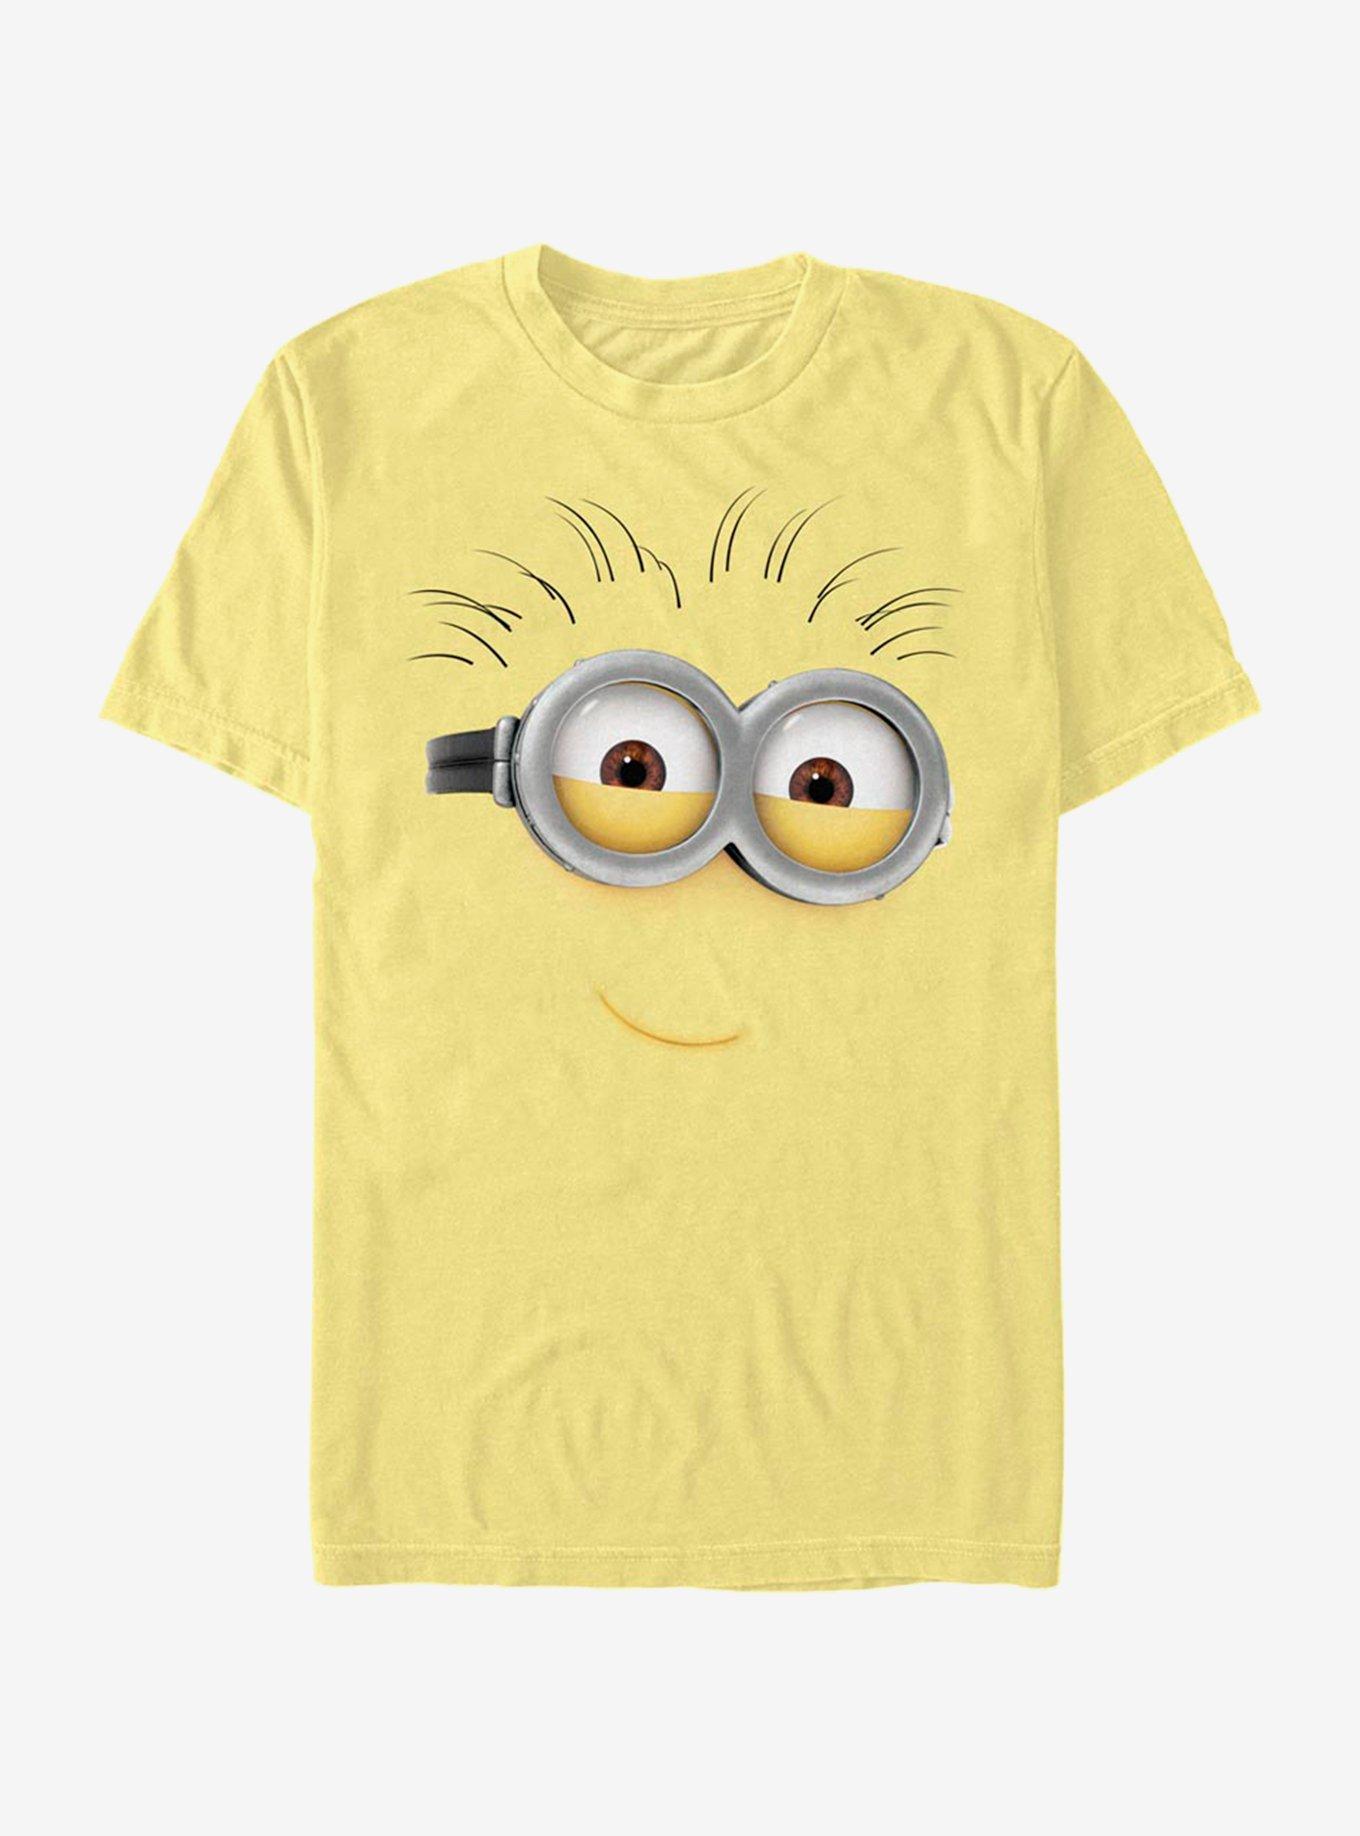 Minions Smile Eyes T-Shirt, , hi-res